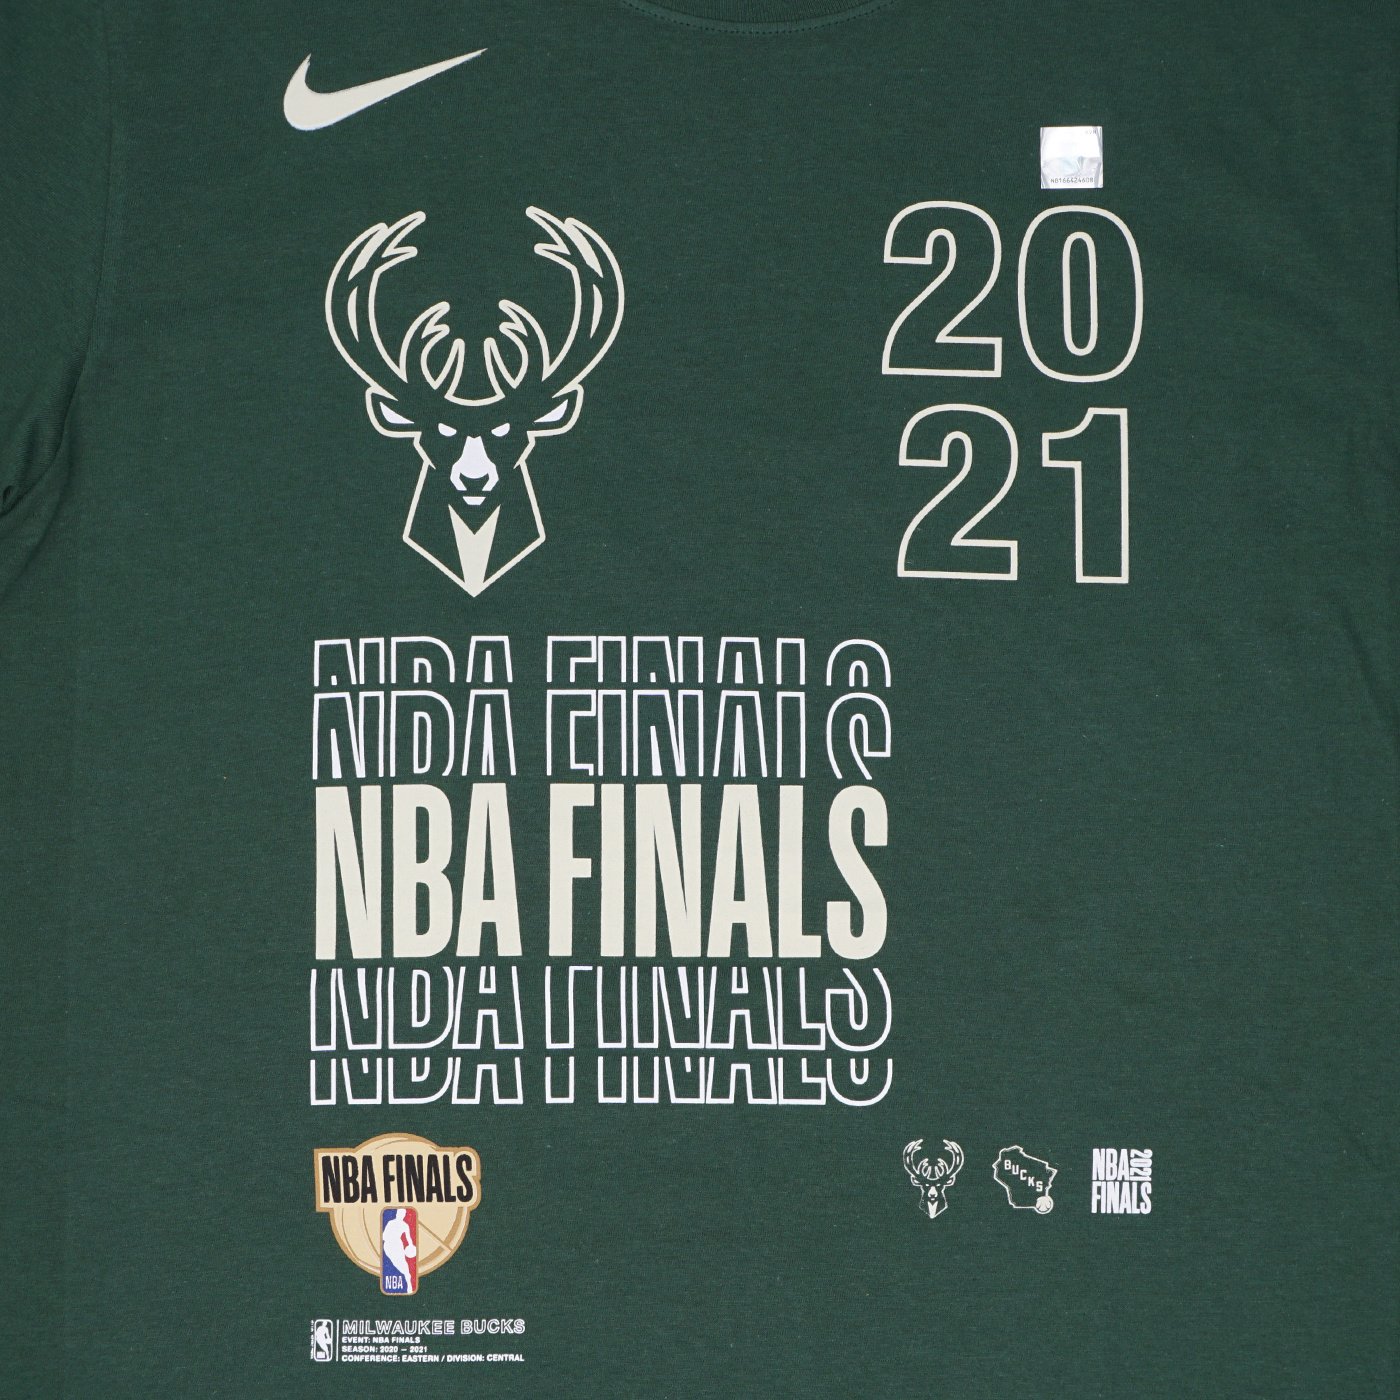 Milwaukee Bucks Shirt Nike Mens Large Green Black New Tags $80 NBA